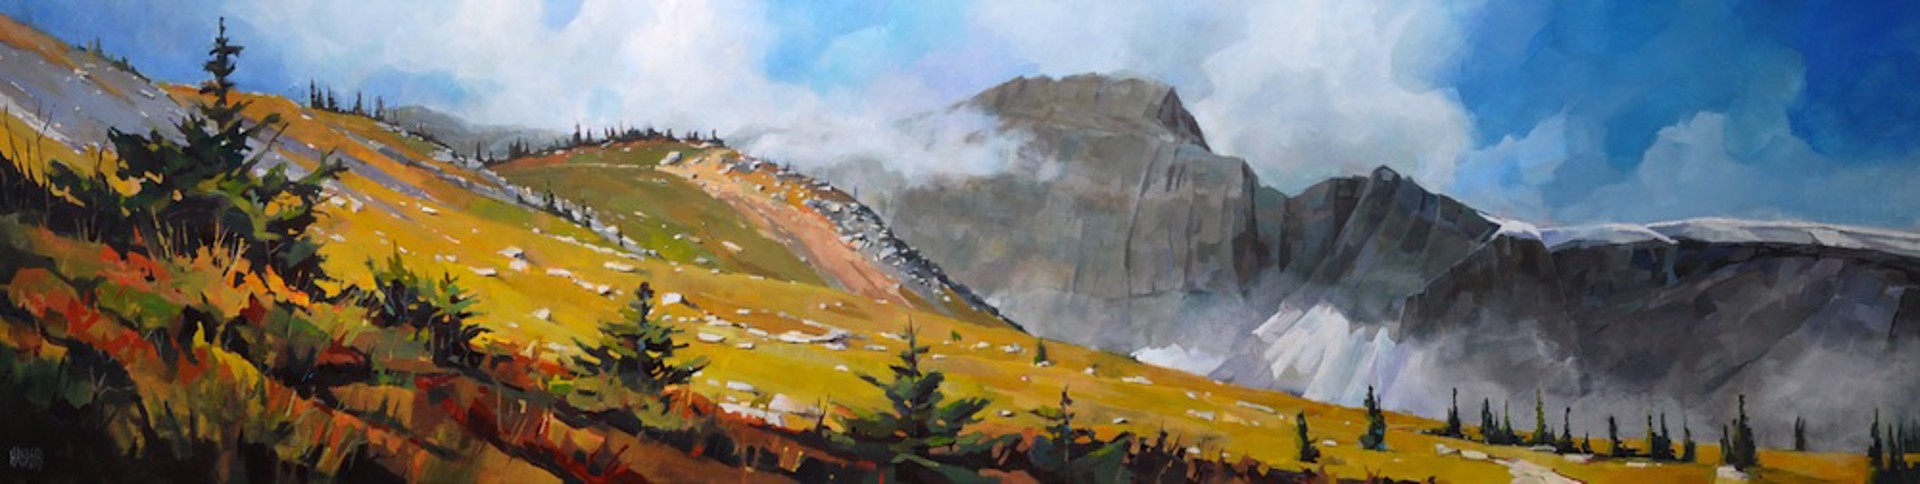 Mount Macoun by Randy Hayashi